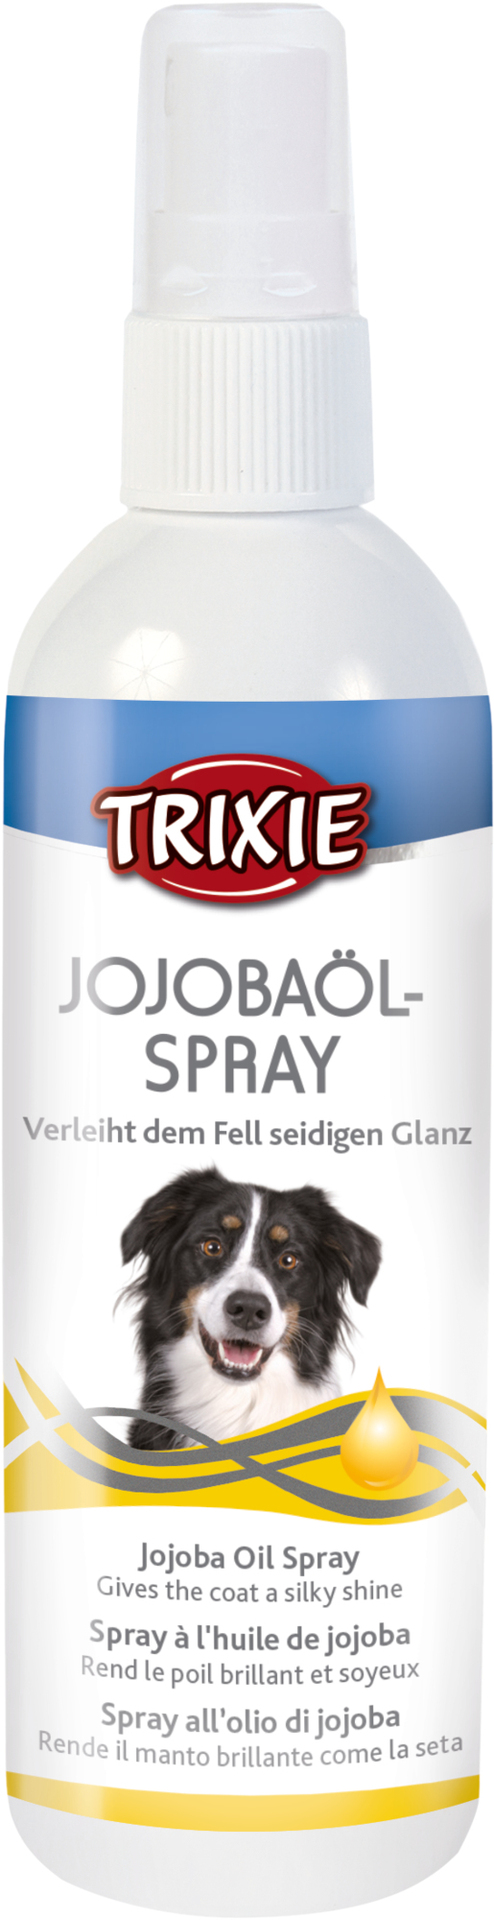 Trixie Heimtierbedarf Jojobaöl-Spray